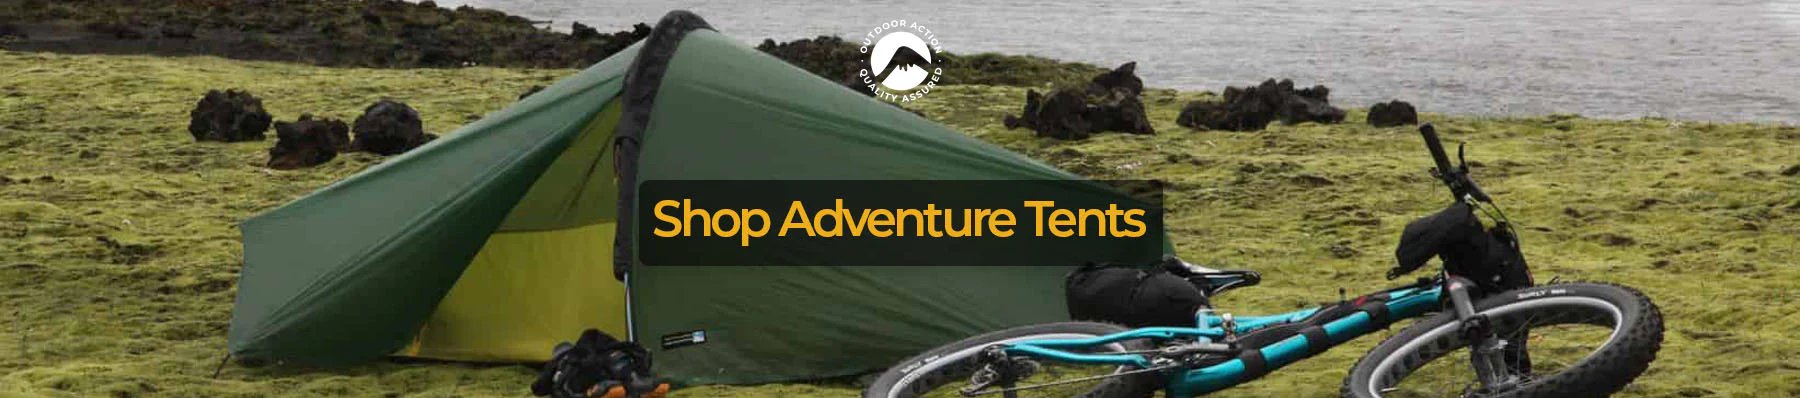 Adventure Tents